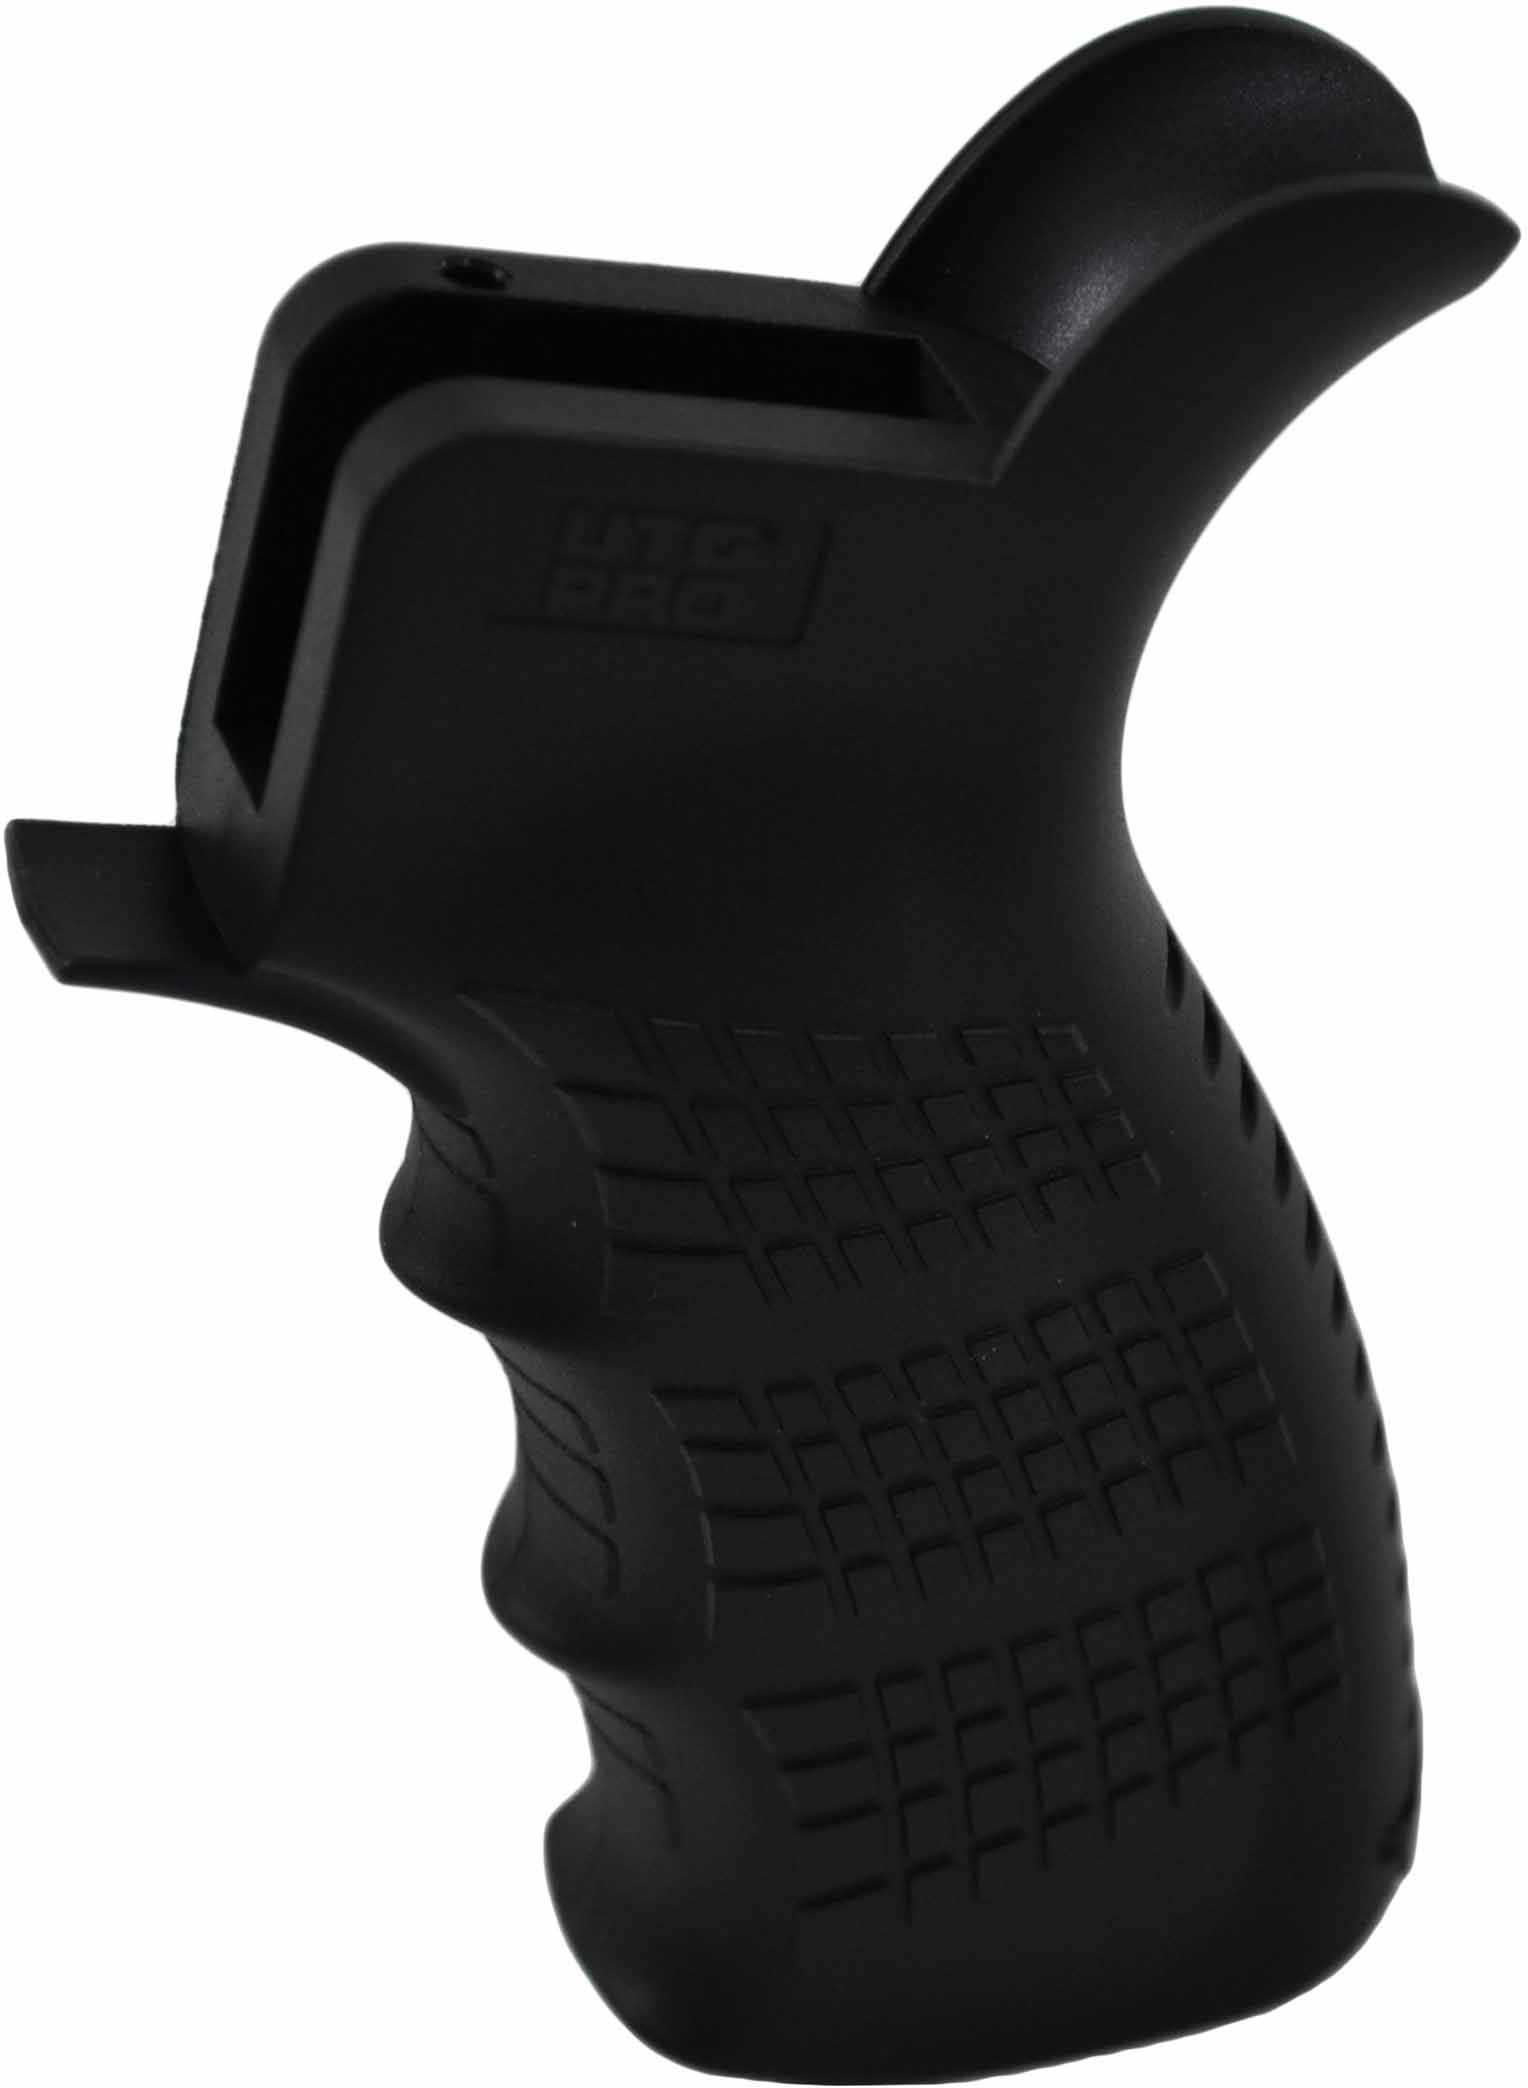 Leapers Inc. - UTG PRO Ambidextrous Grip Built Storage Compartment Fits AR-15 Black RBUPG01B